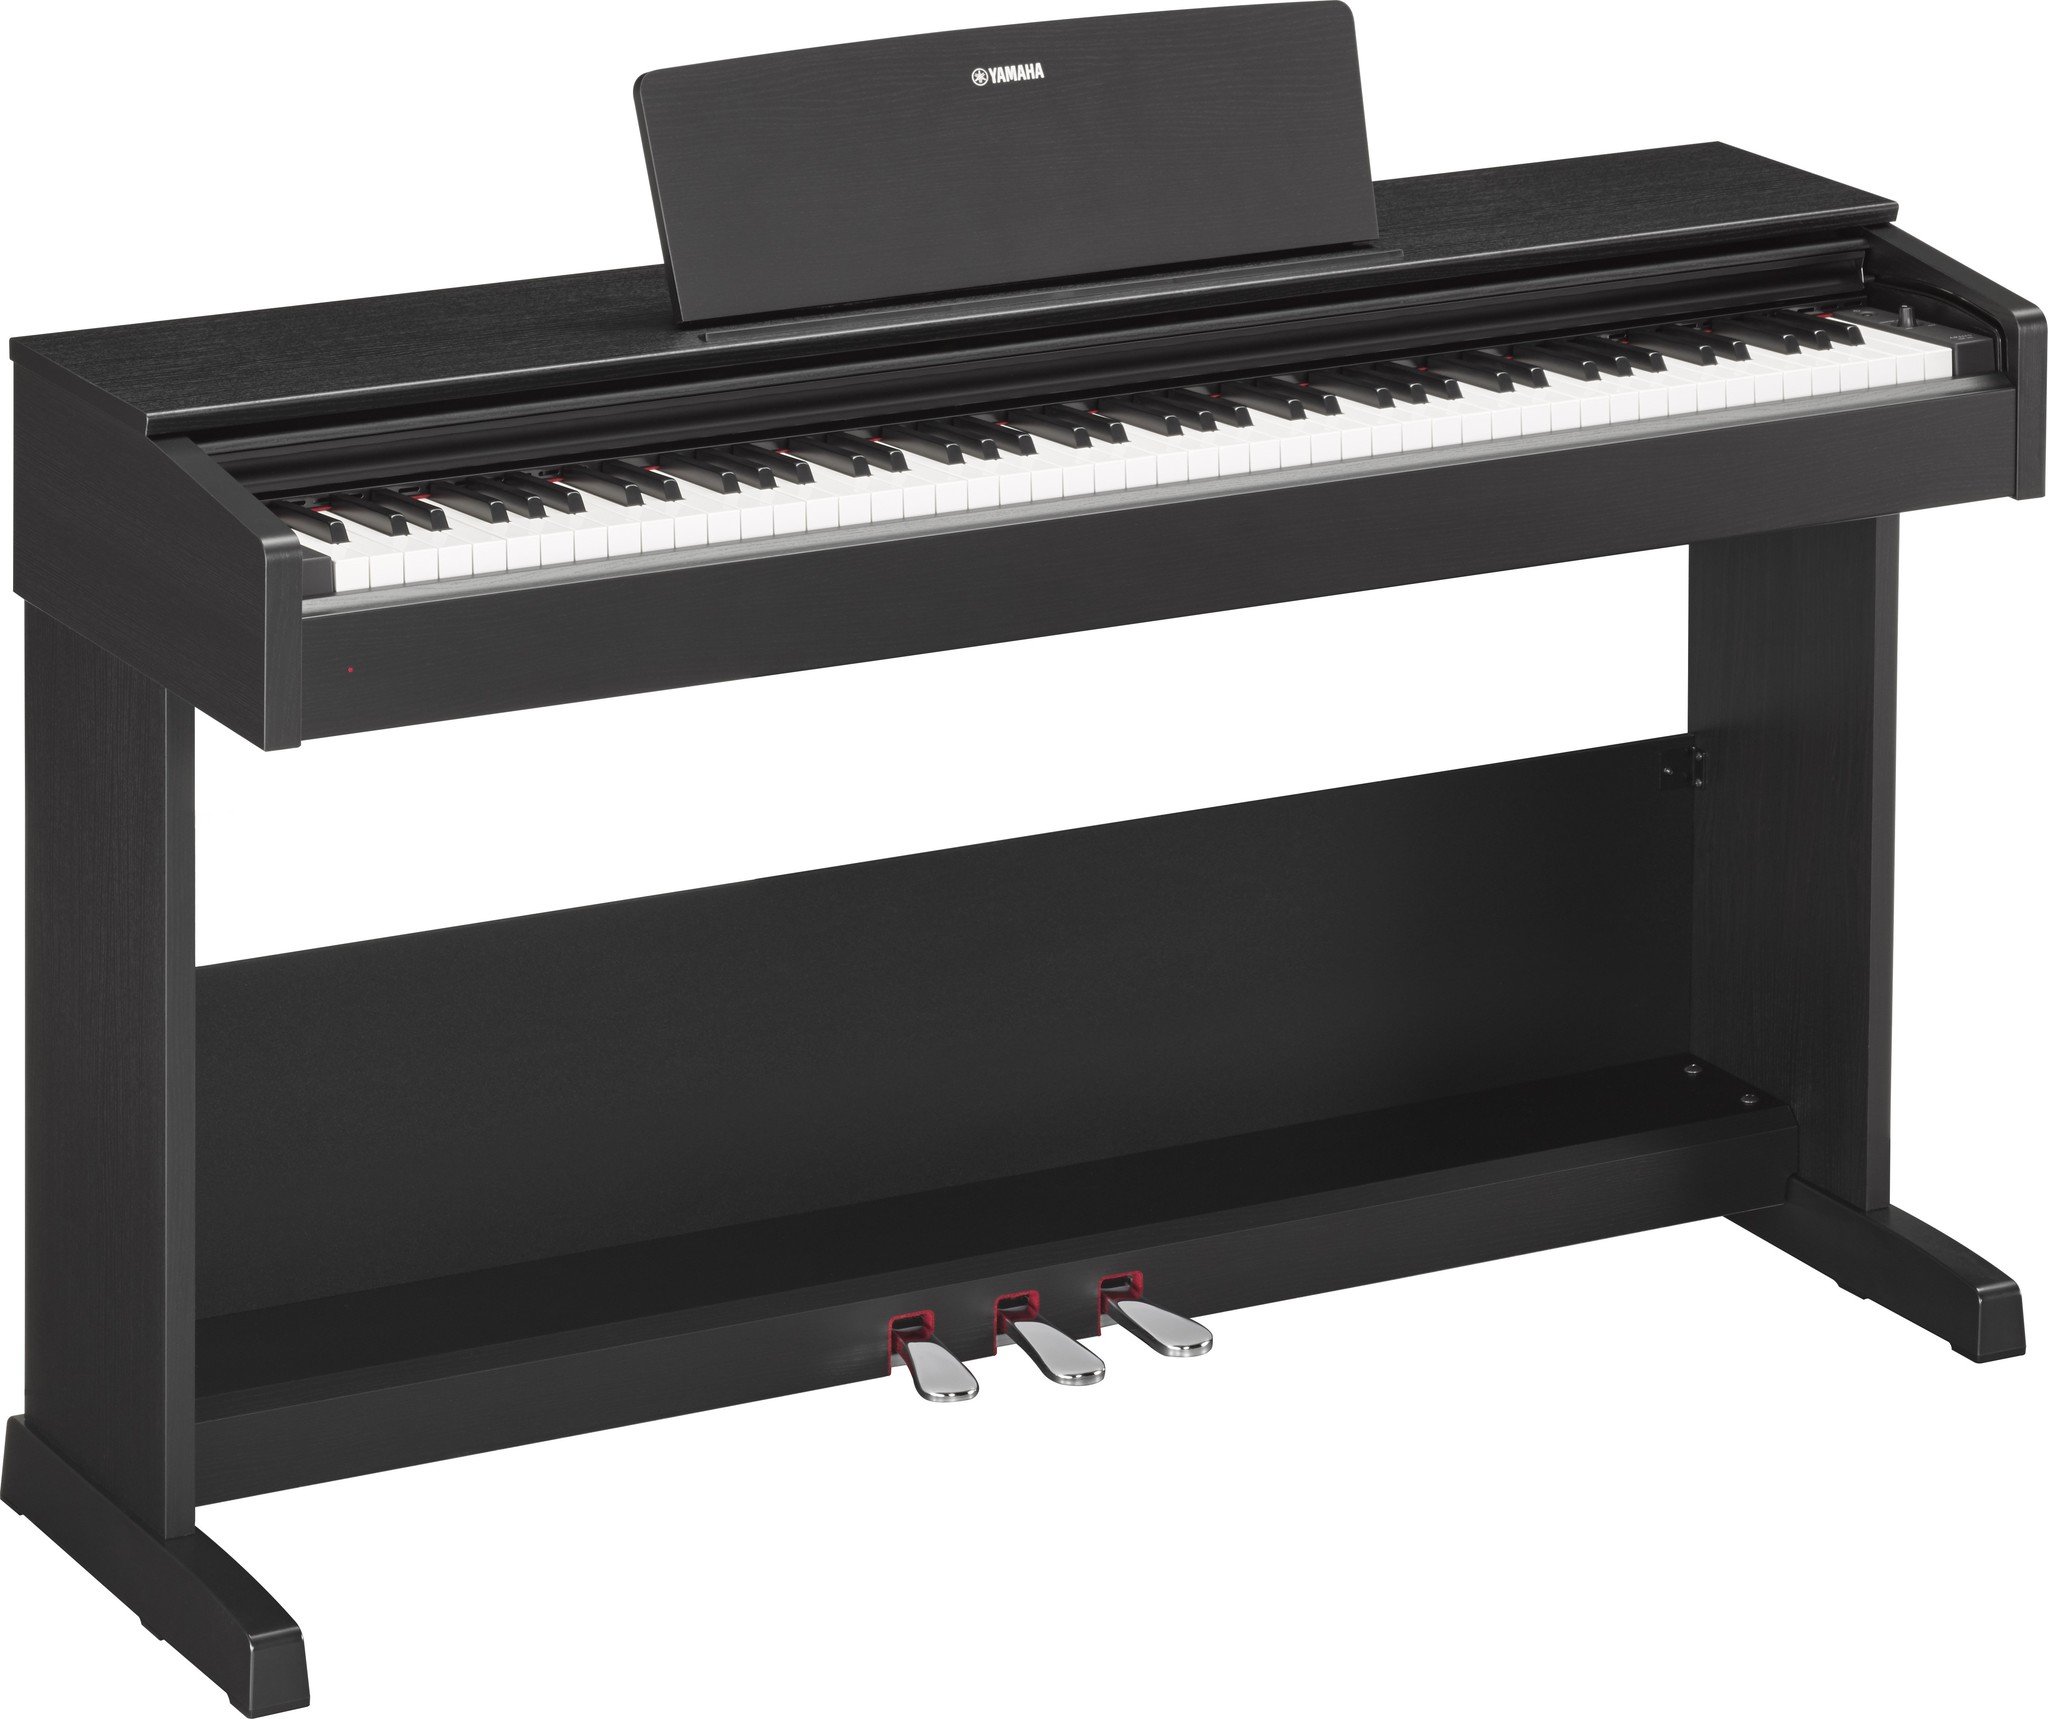 Yamaha Digital Piano Product